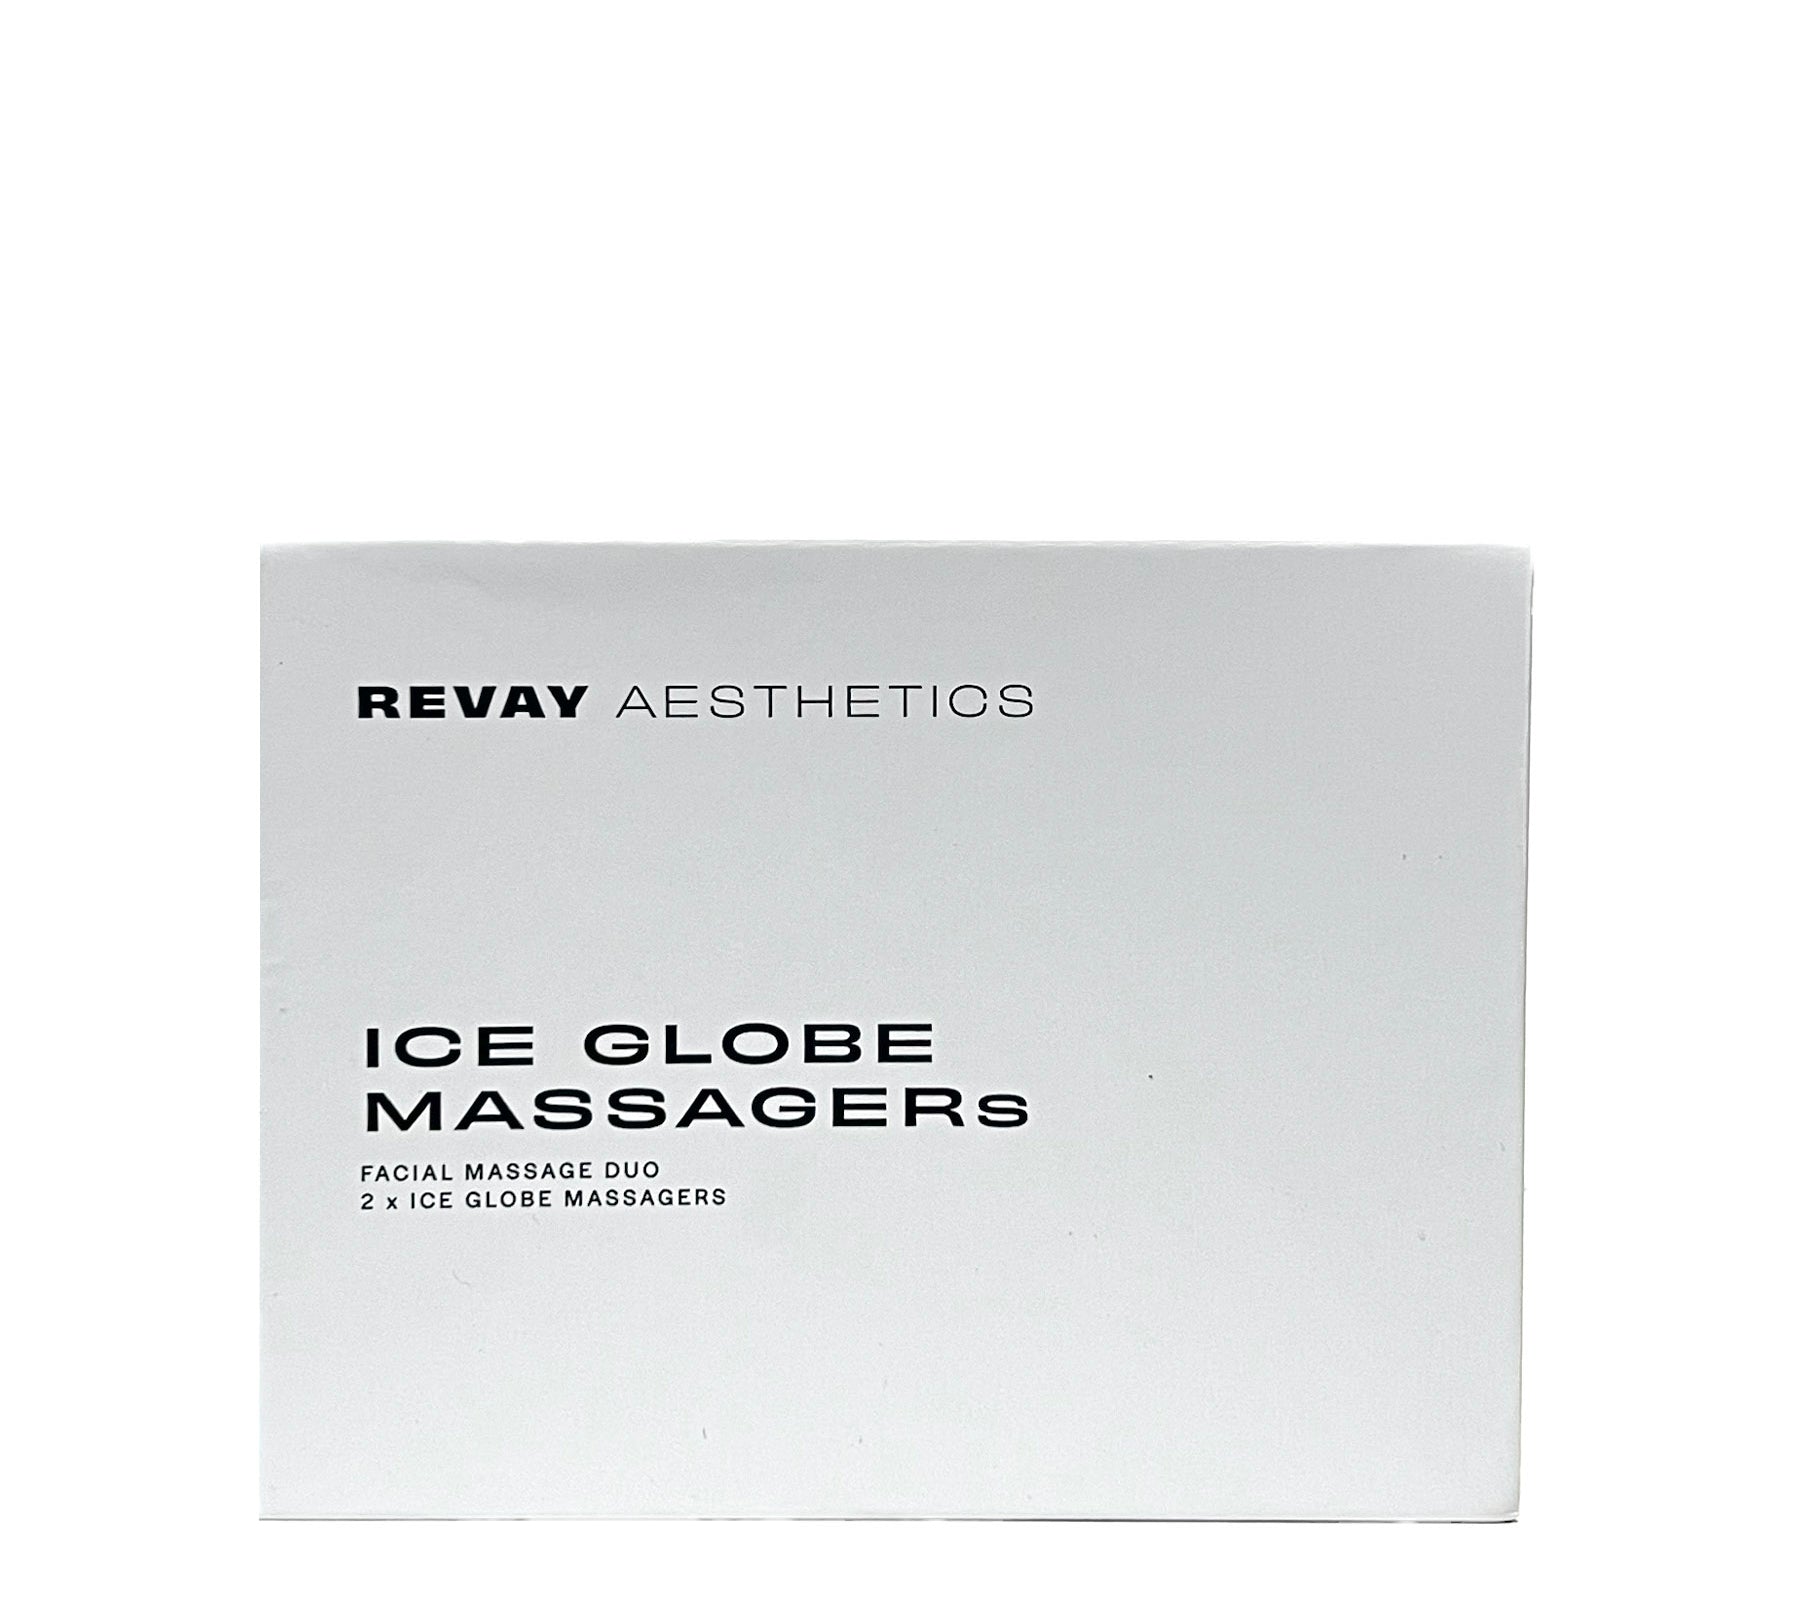 facial ice globe massagers product box